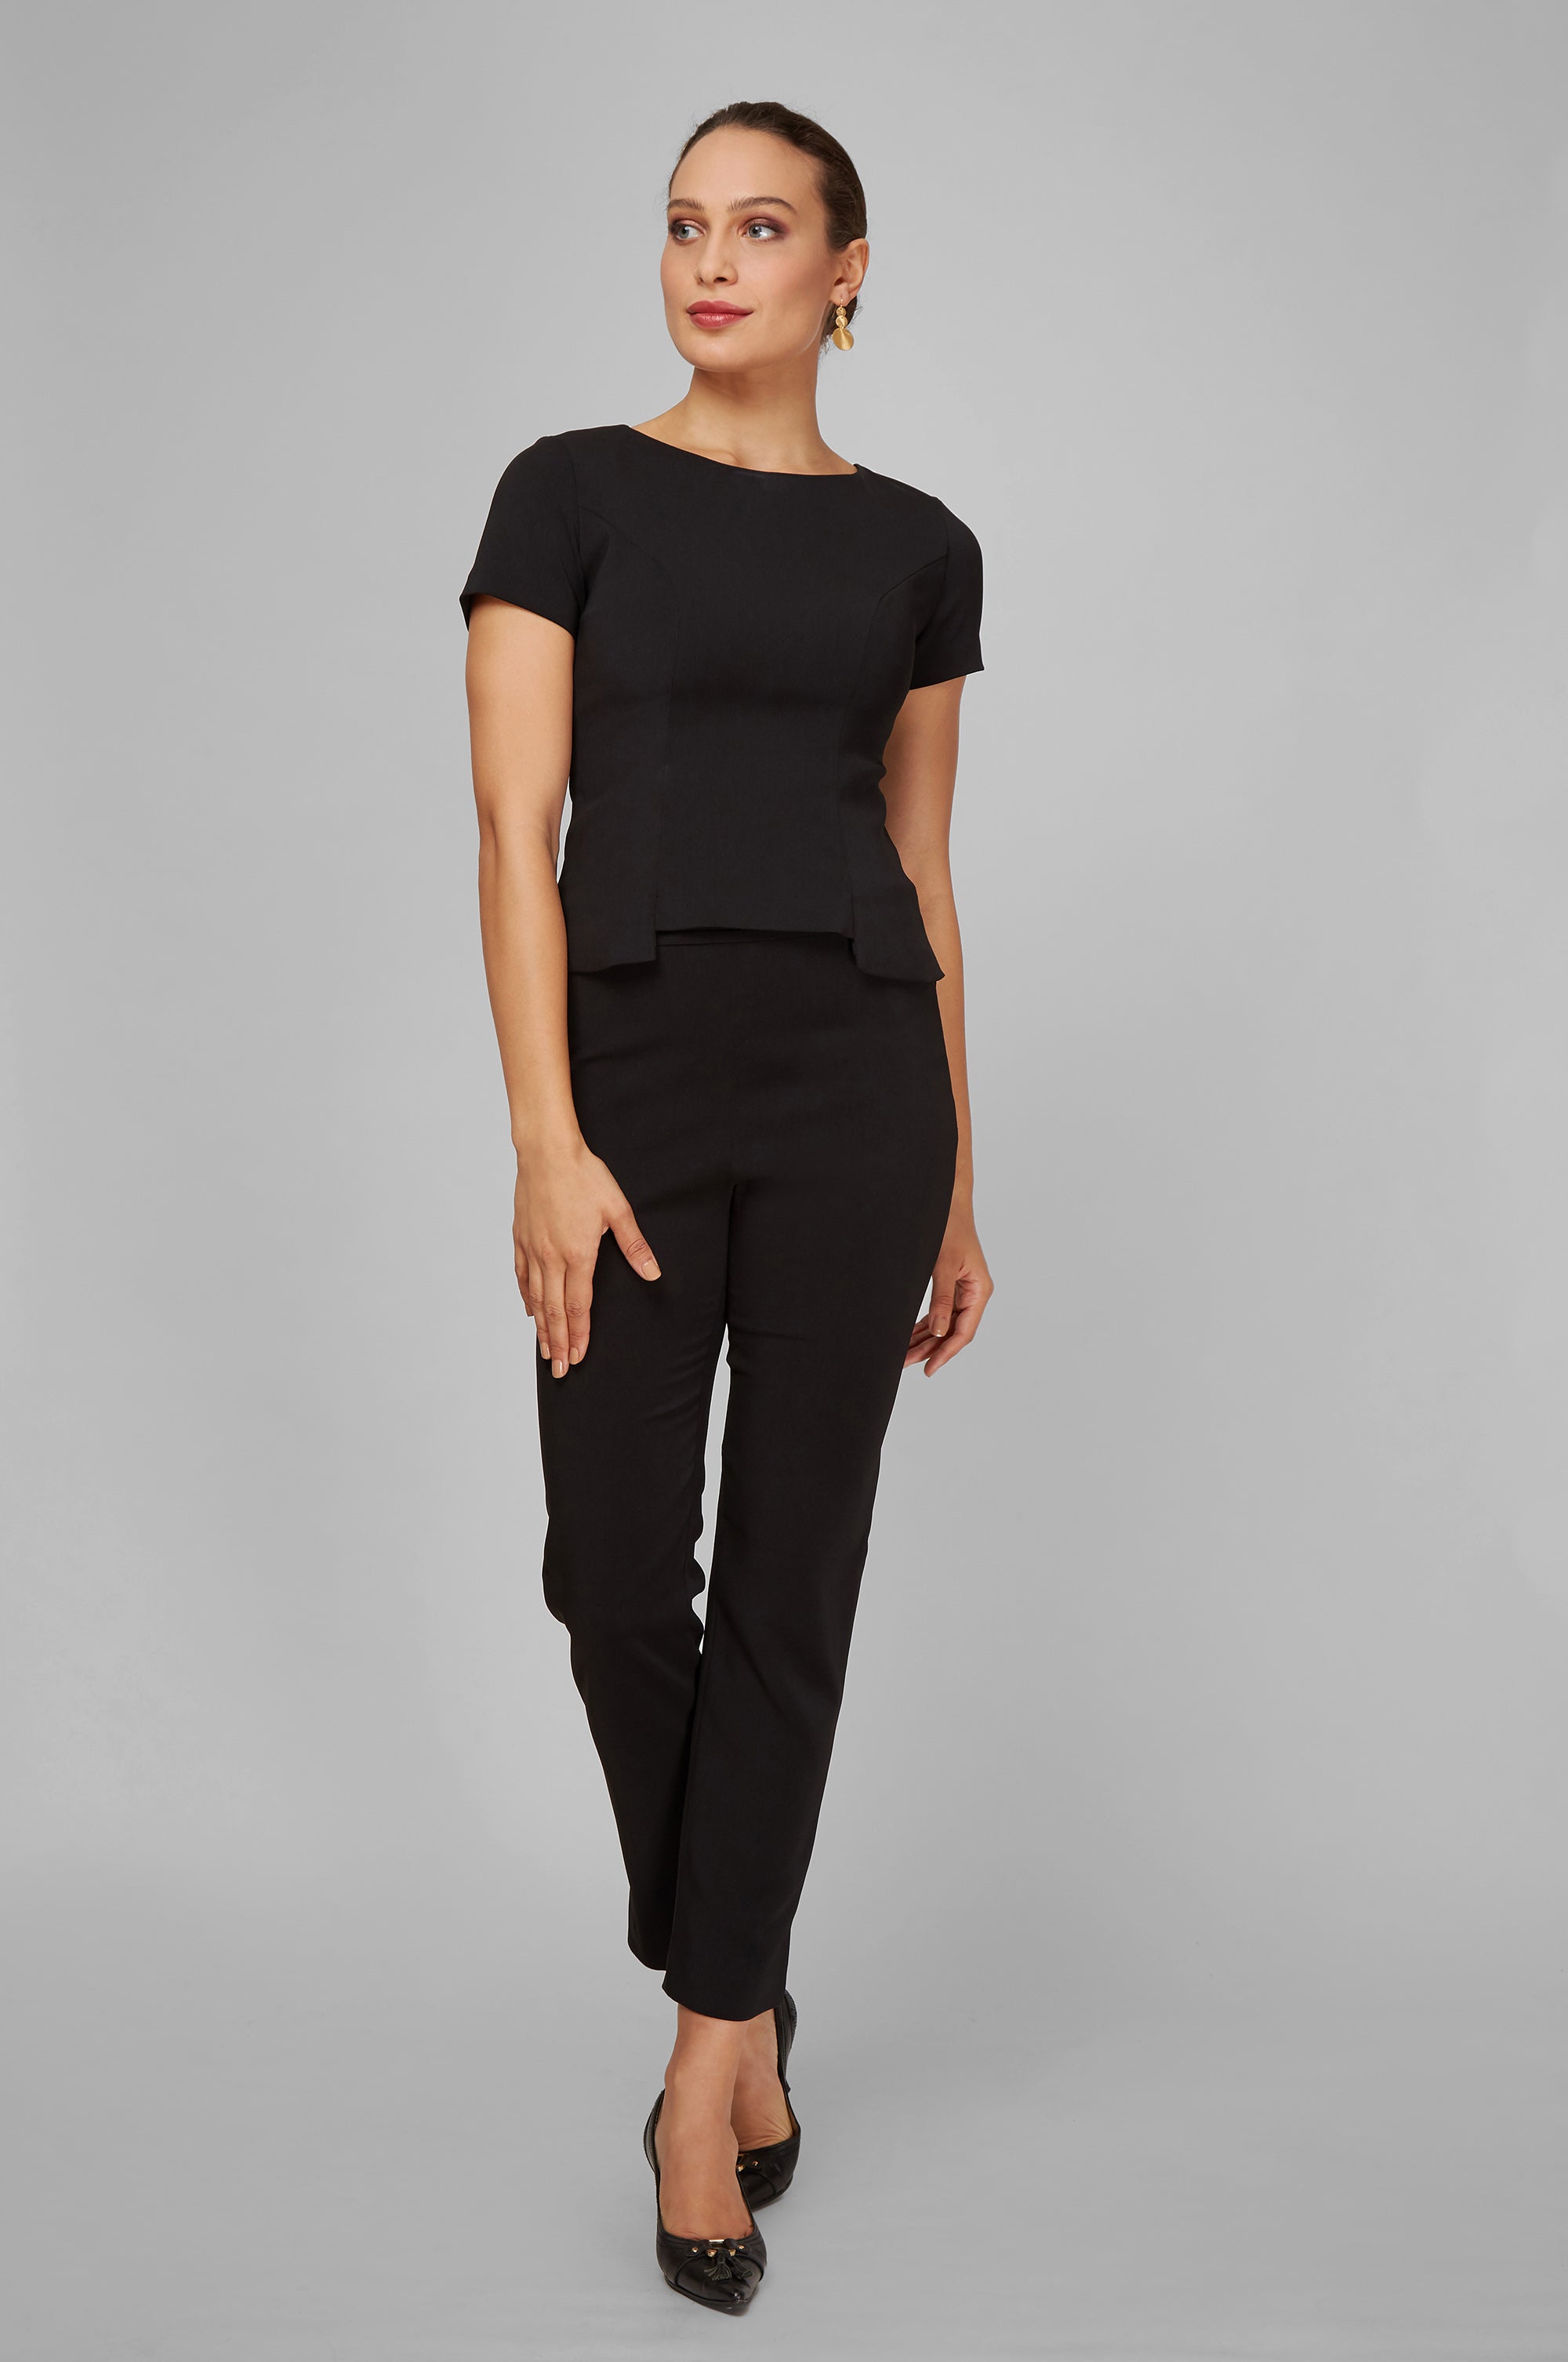 Professional Women's Chelsea Top in Black Workwear  | Nora Gardner